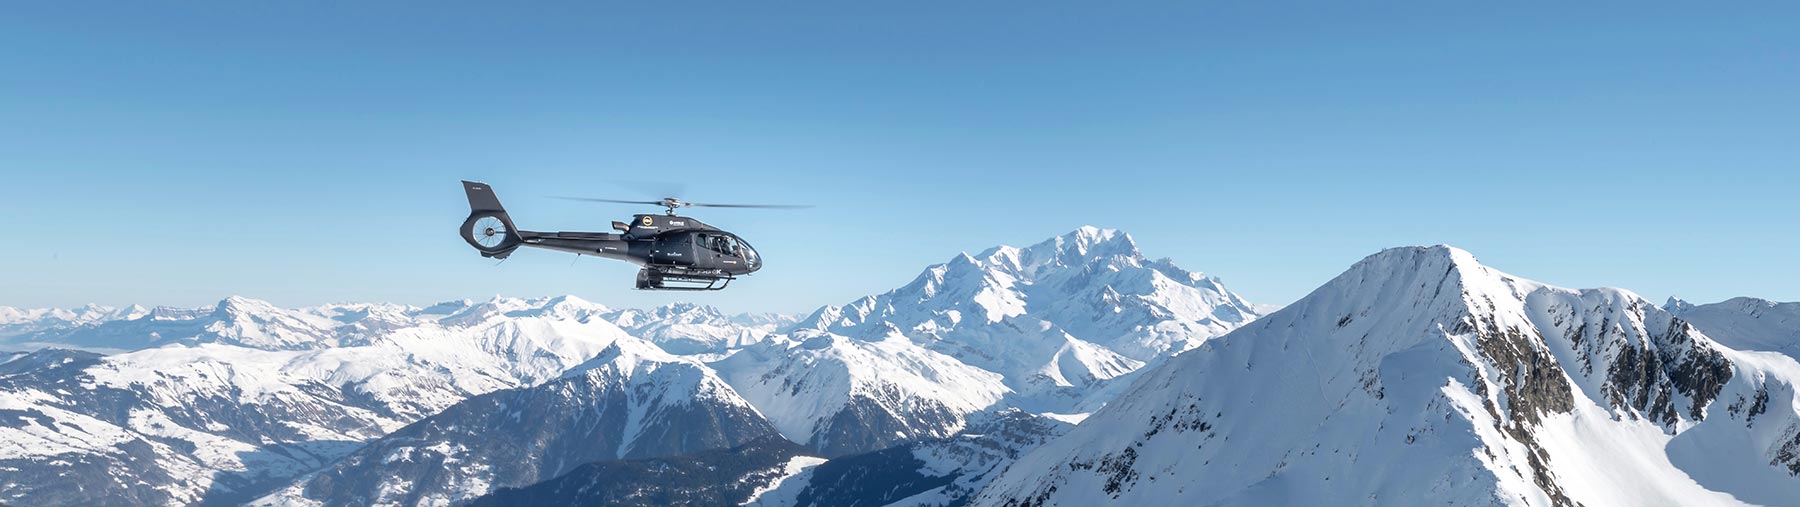 Italian Alps ski resorts helicopter charter service